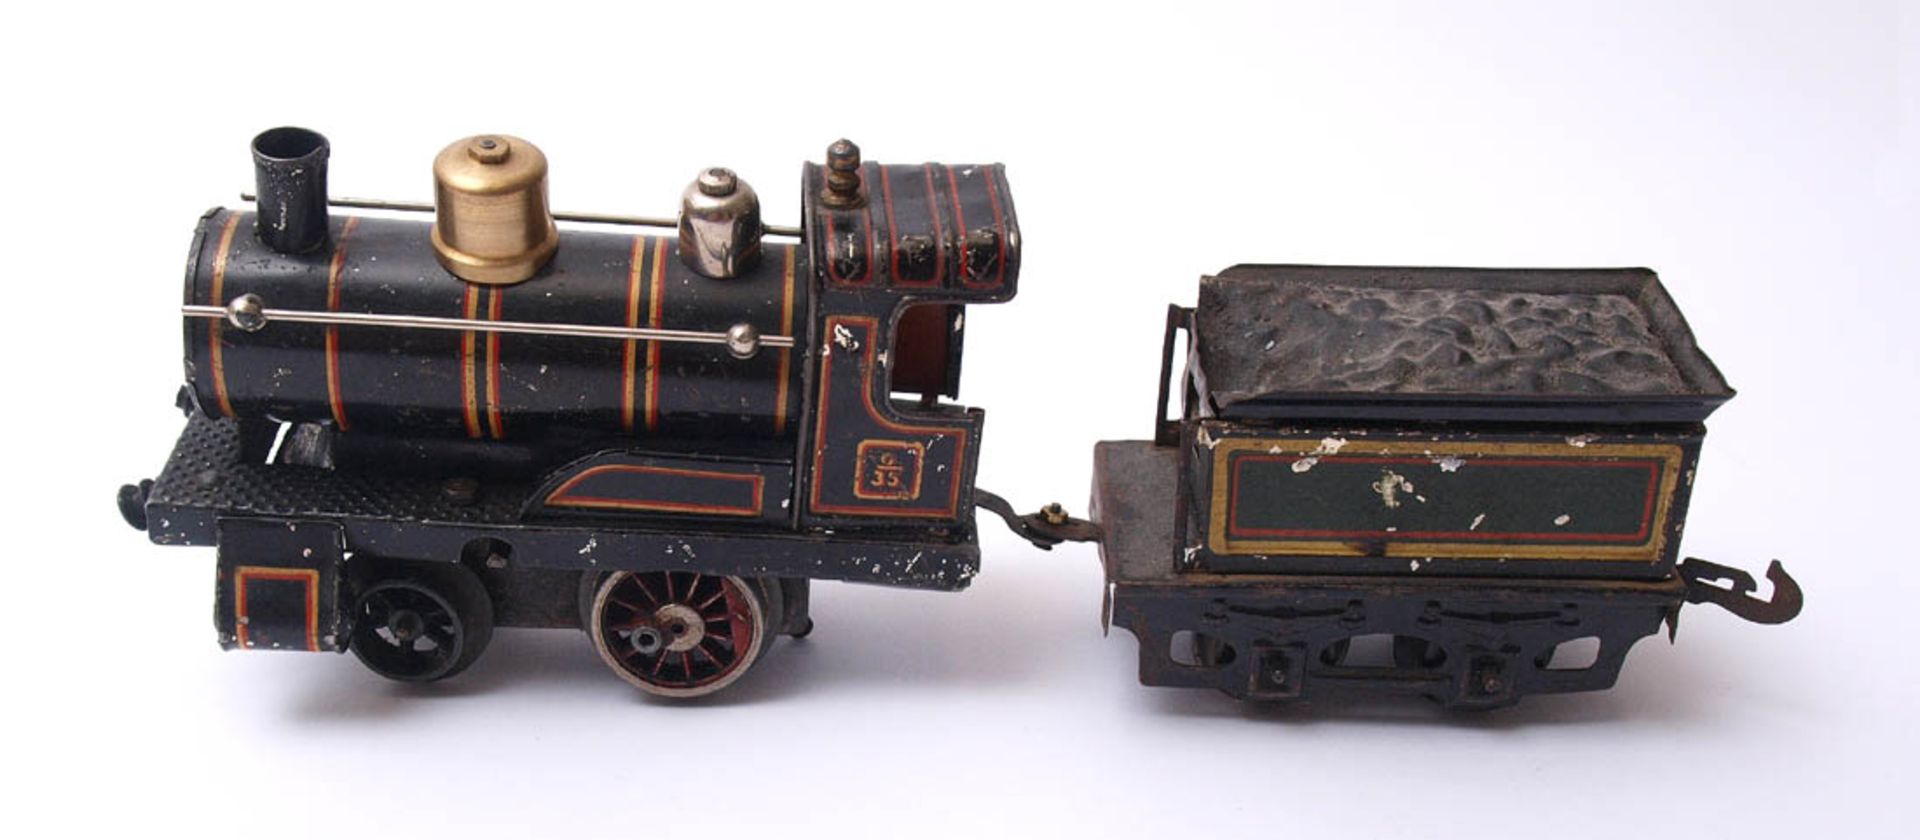 Dampflokomotive mit Tender, Bing, Spur 0 Blech, farbig lithographiert. Altersspuren, Feder